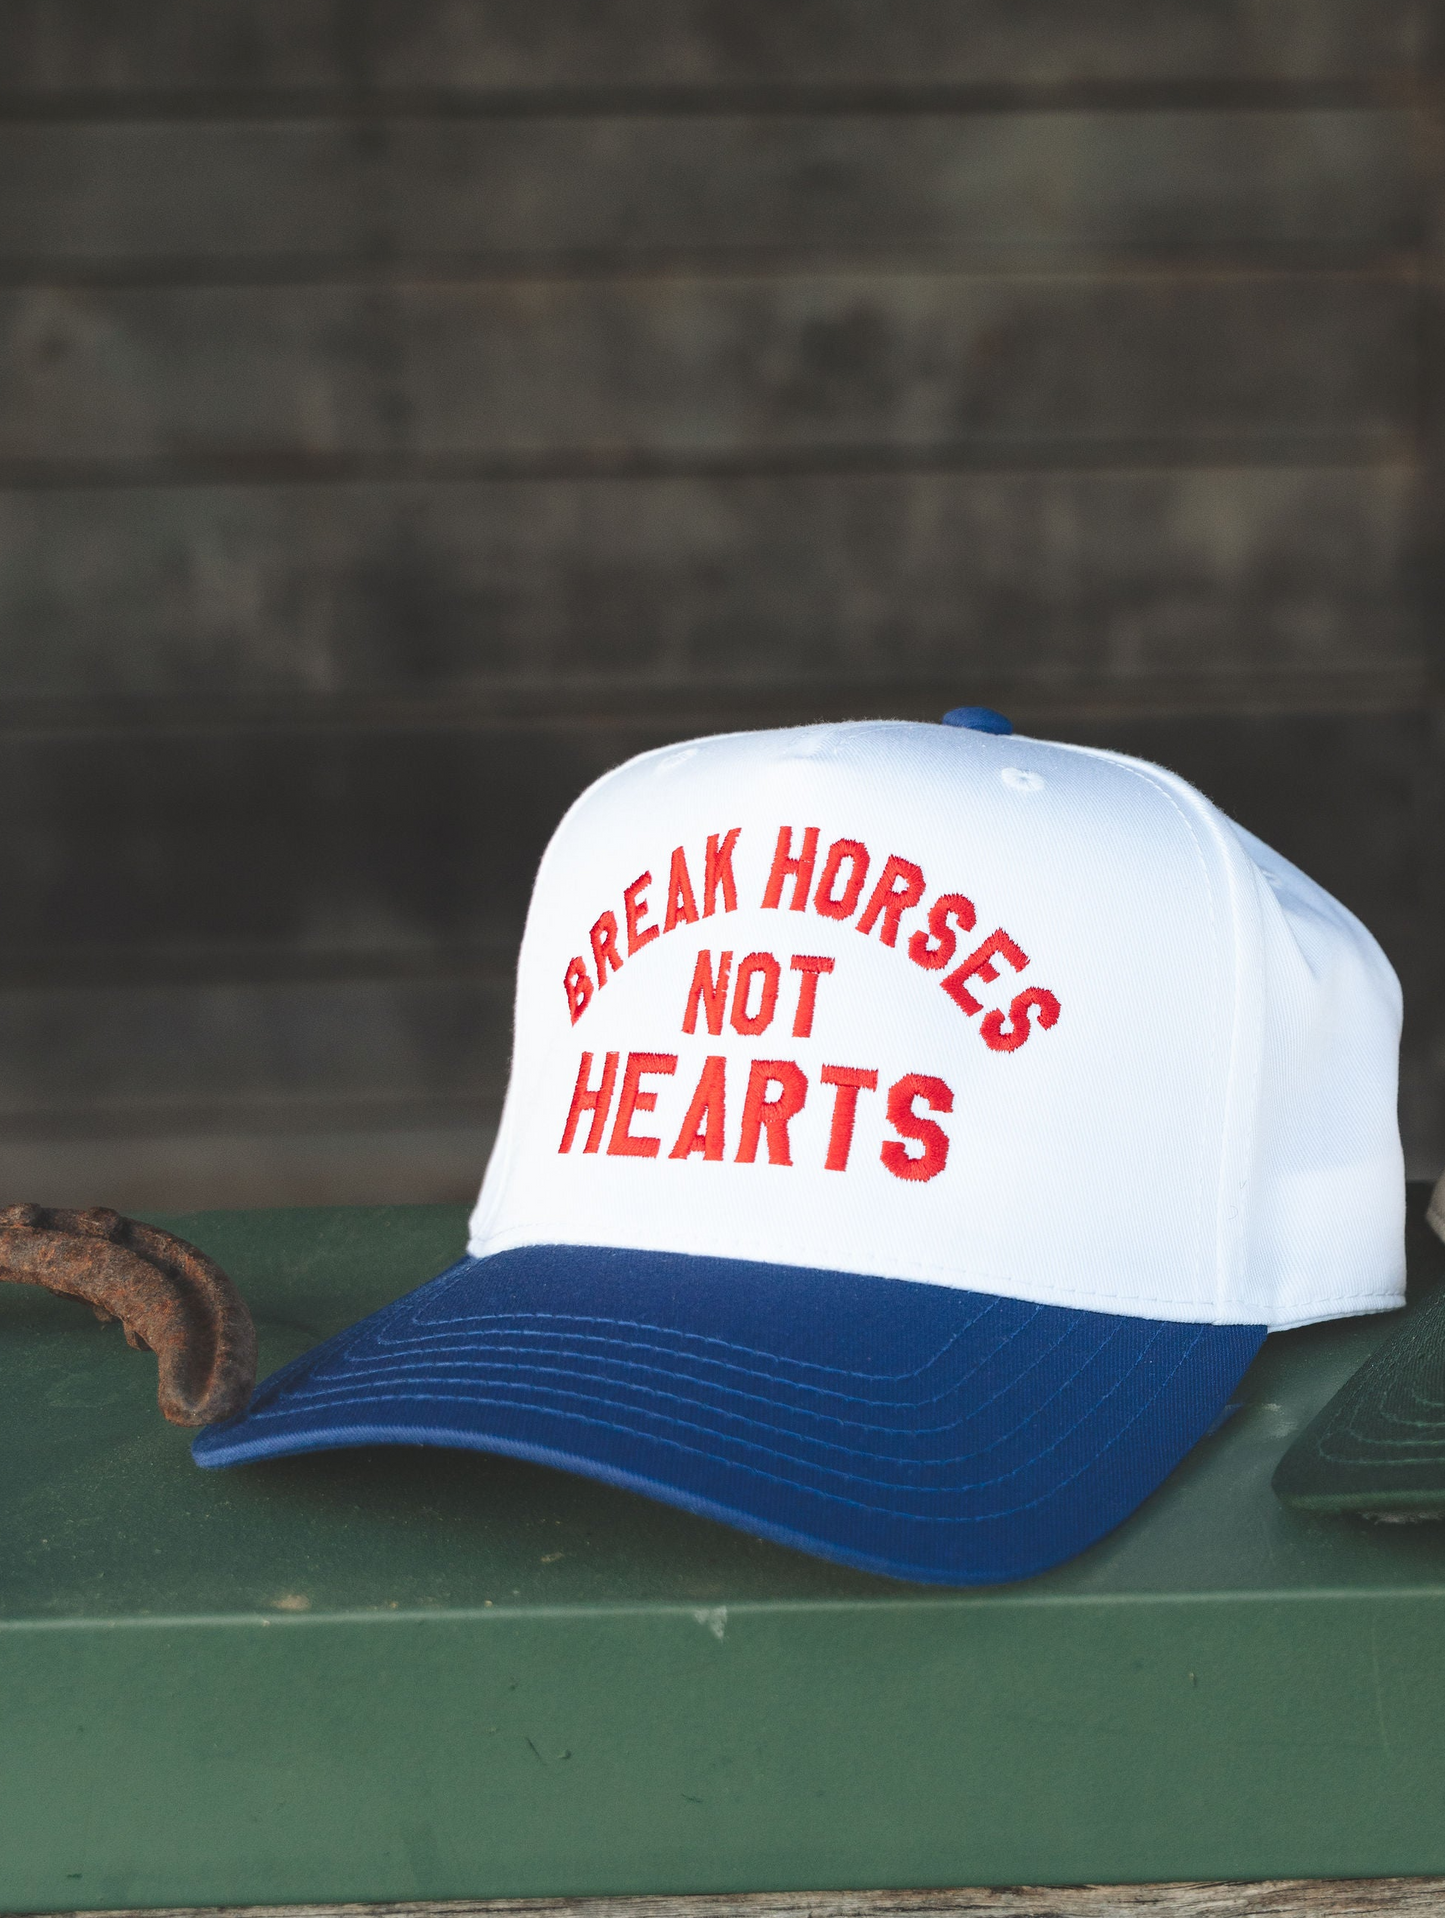 Break Horses Not Hearts Trucker Hat